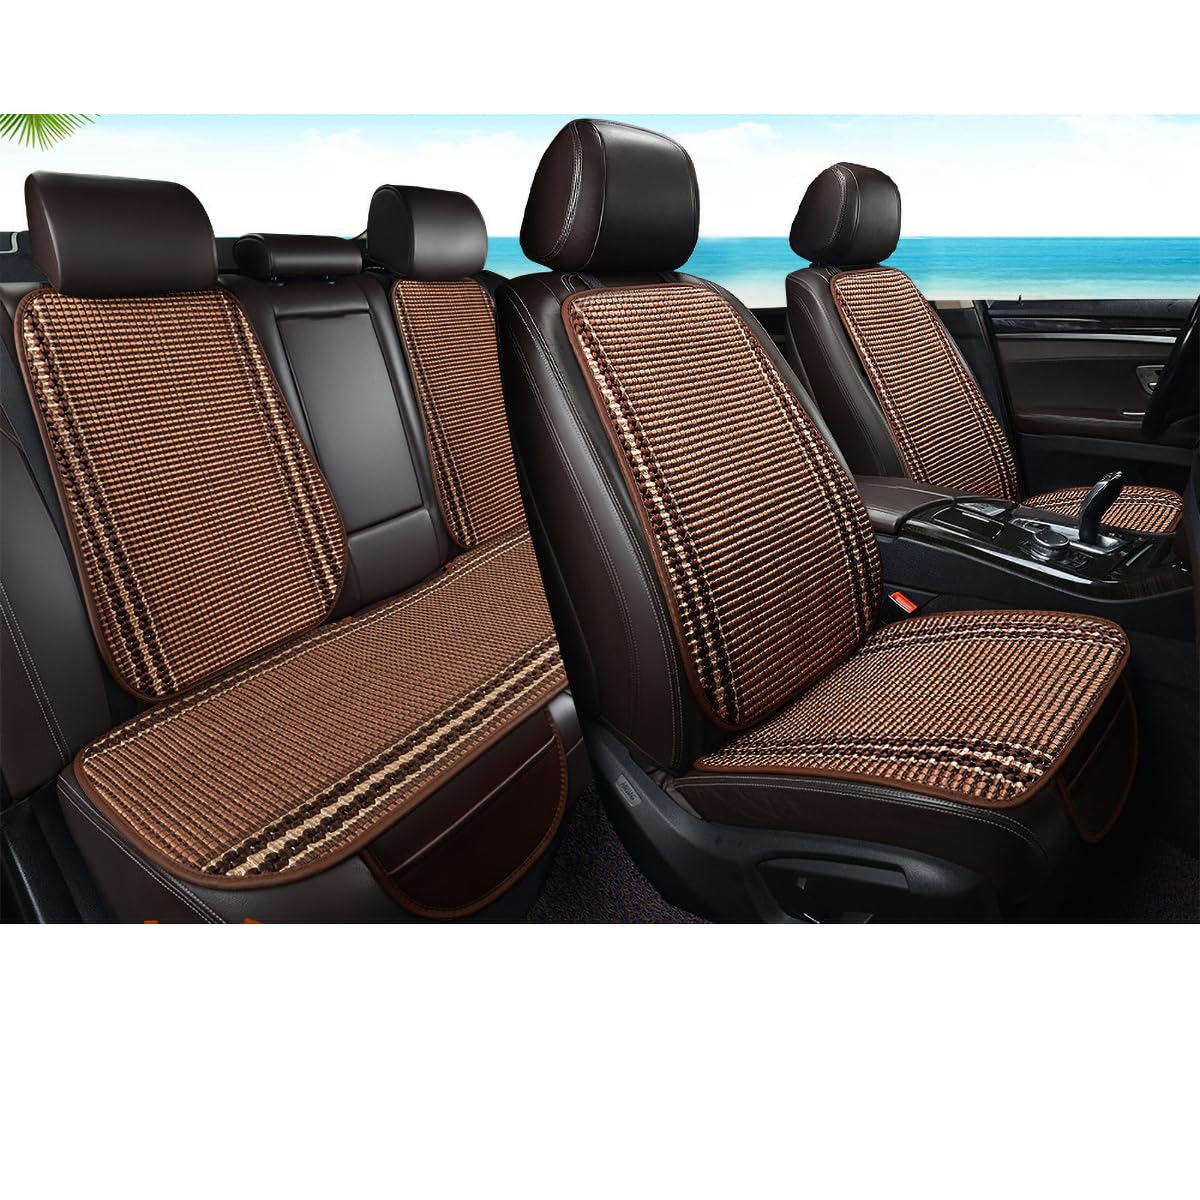 ASNAT Belüfteter Autositzbezug den Sommer für Mercedes Benz CLS-Klasse CLS 250 d, Atmungsaktiv Und Bequem, Anti Rutsch Autositzschoner, B-coffee-7PCS von ASNAT